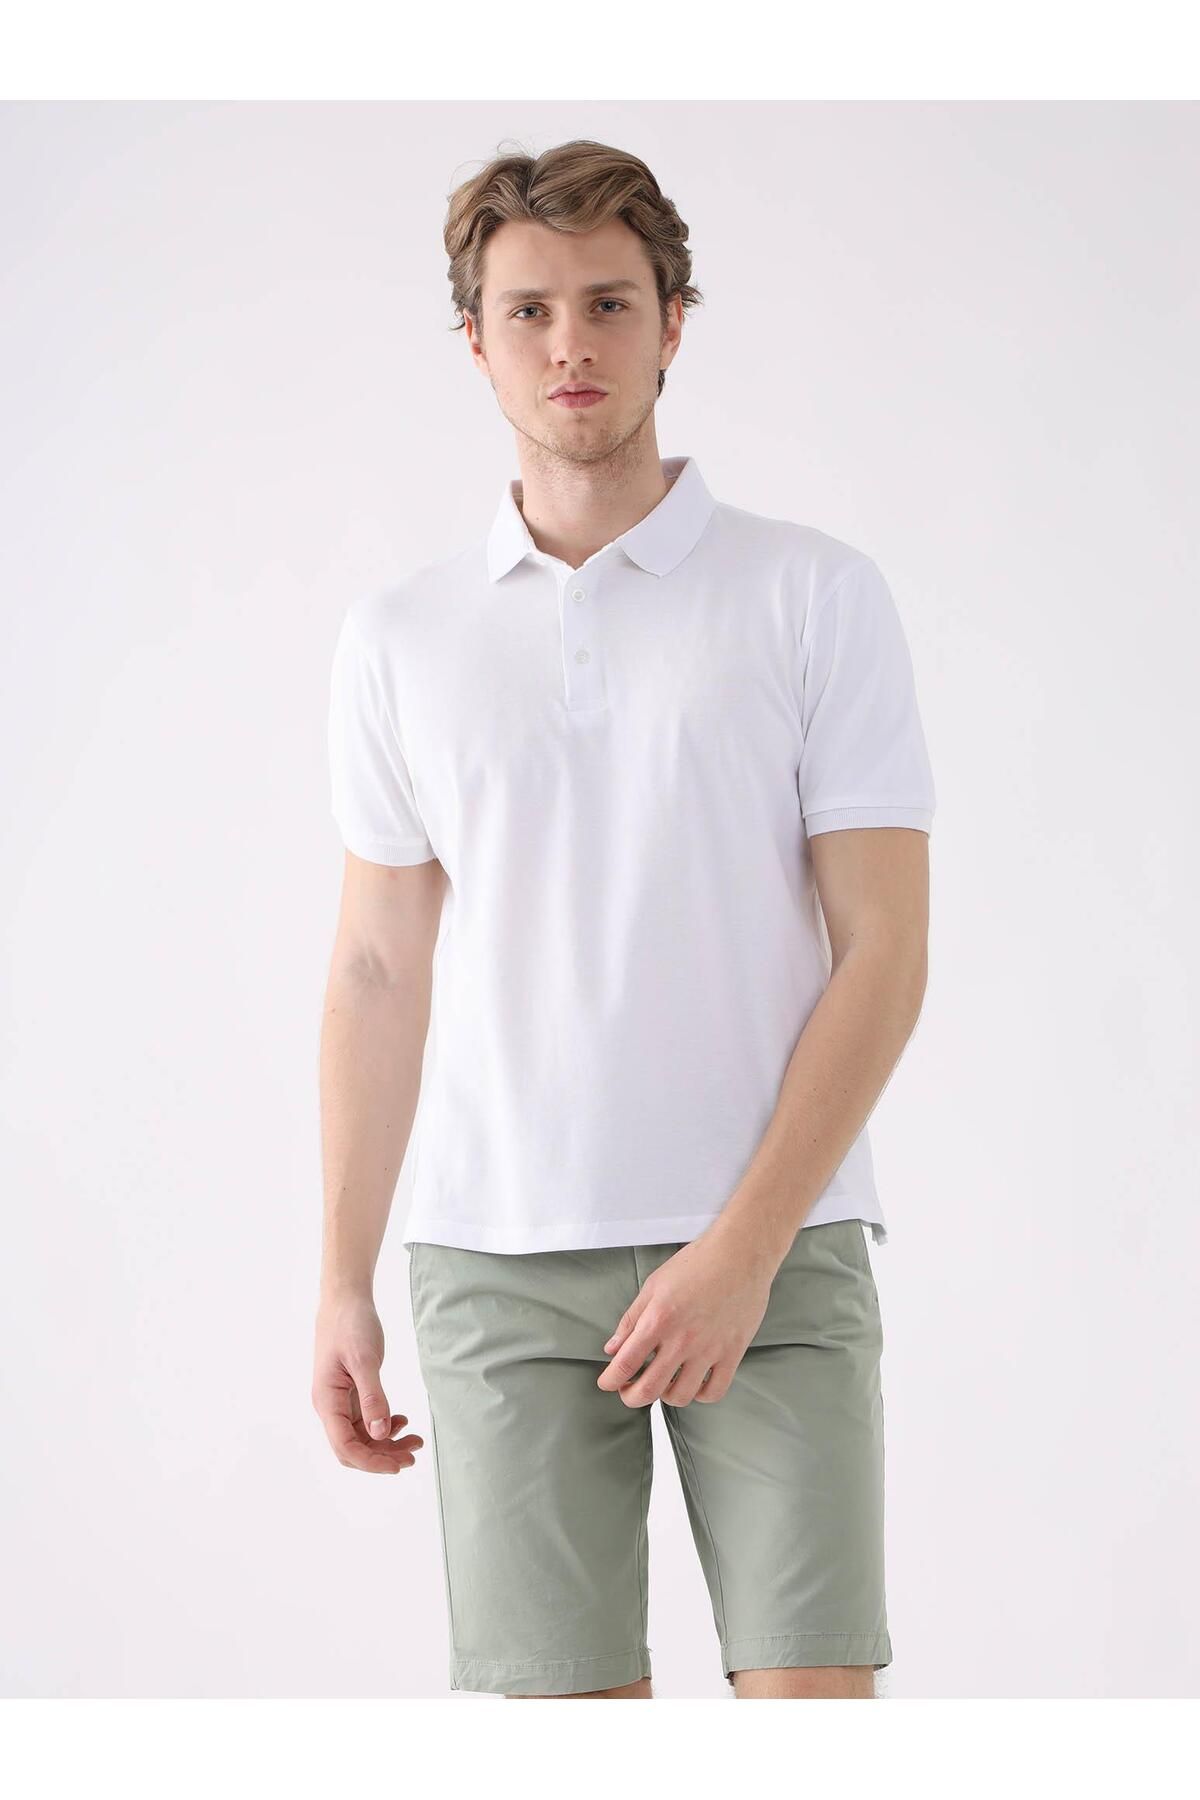 Dufy Beyaz Erkek Slim Fit Düz Polo Yaka Tshirt - 85398